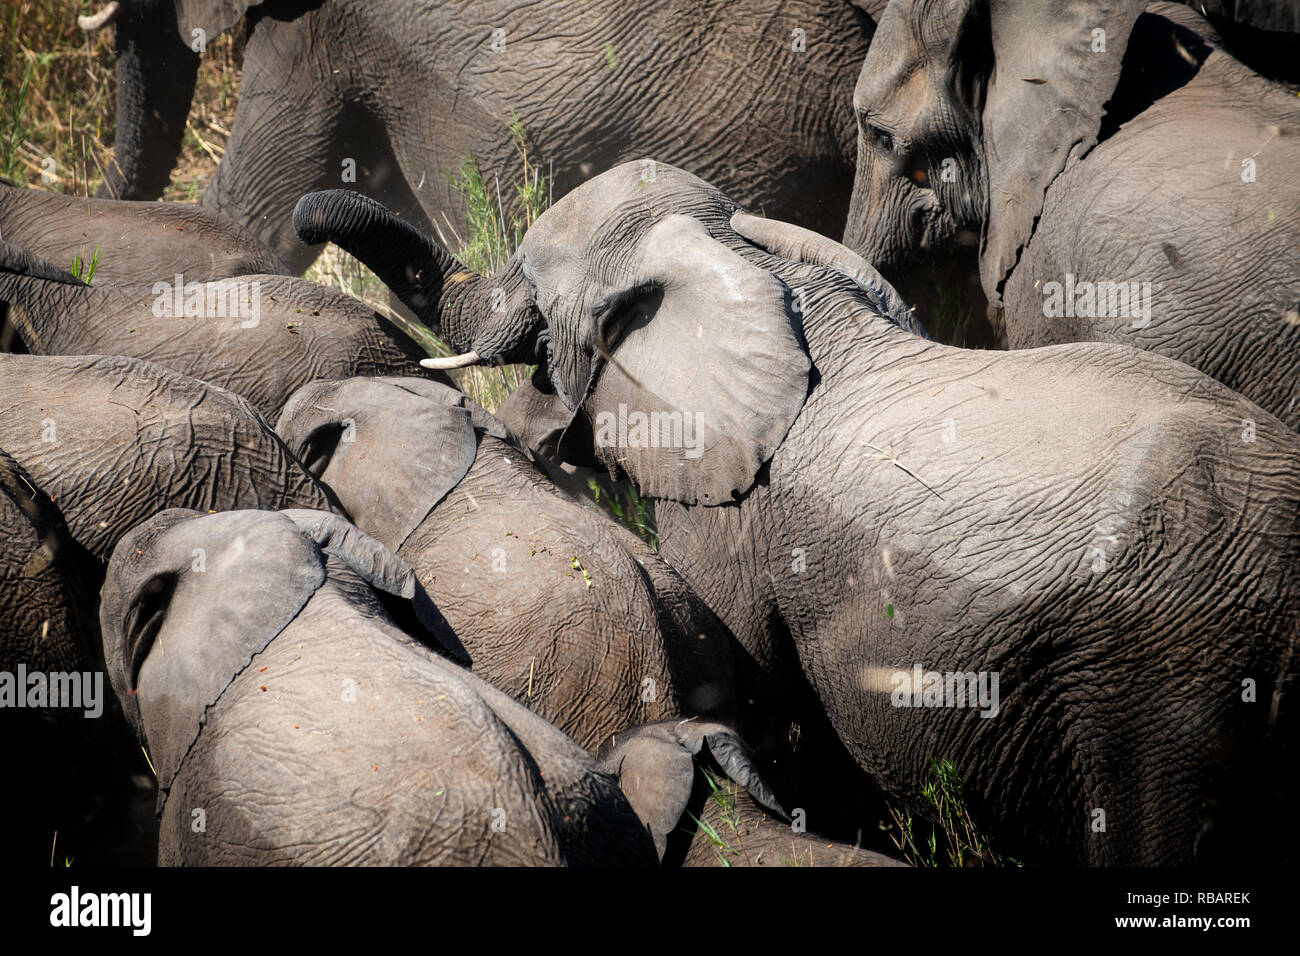 Afrikanische Elefanten in Südafrika Krüger Nationalpark. Stockfoto